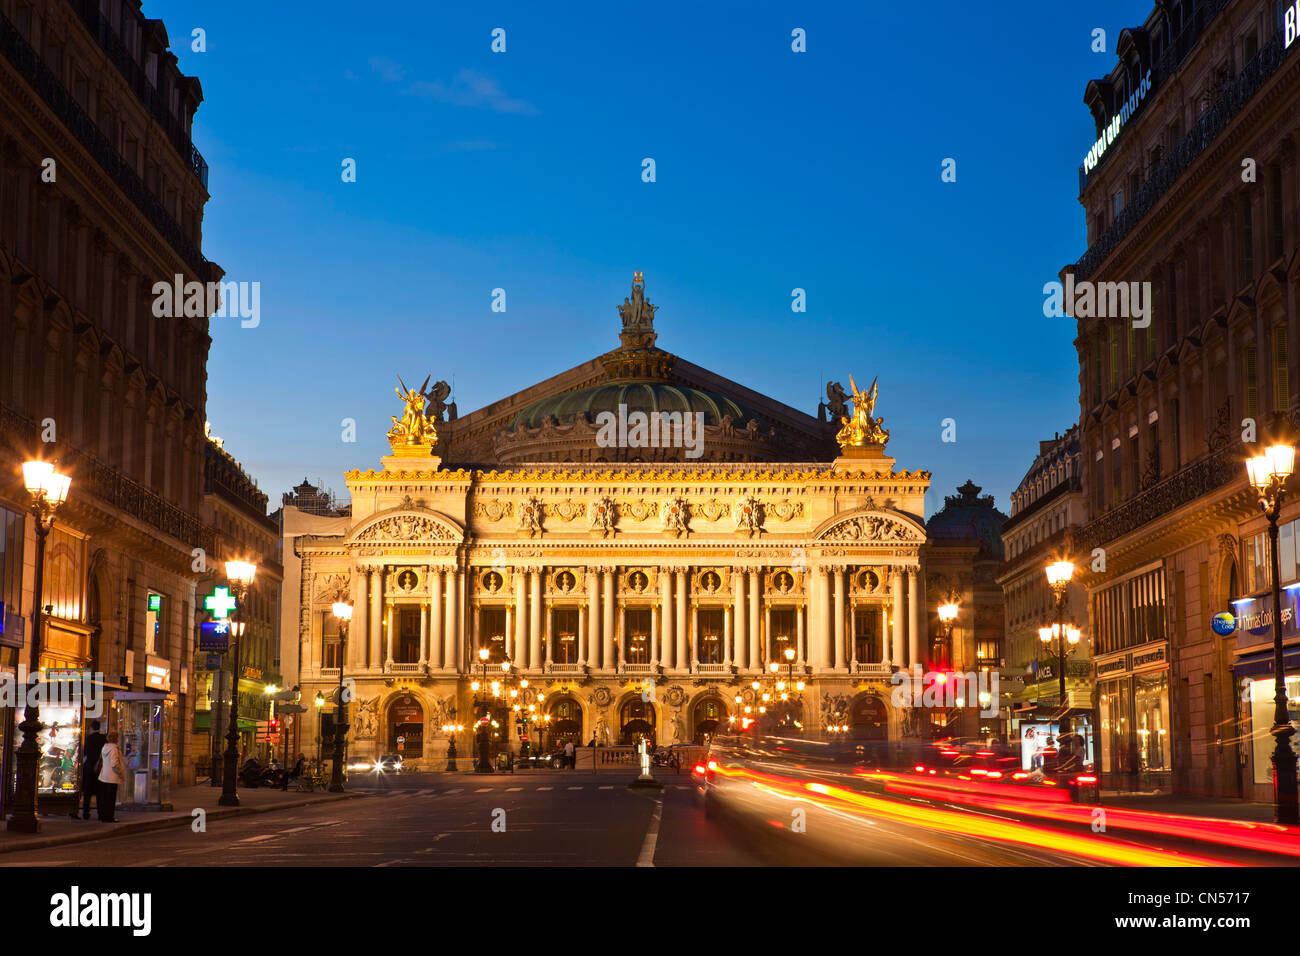 France, Paris, the Opera Garnier Stock Photo